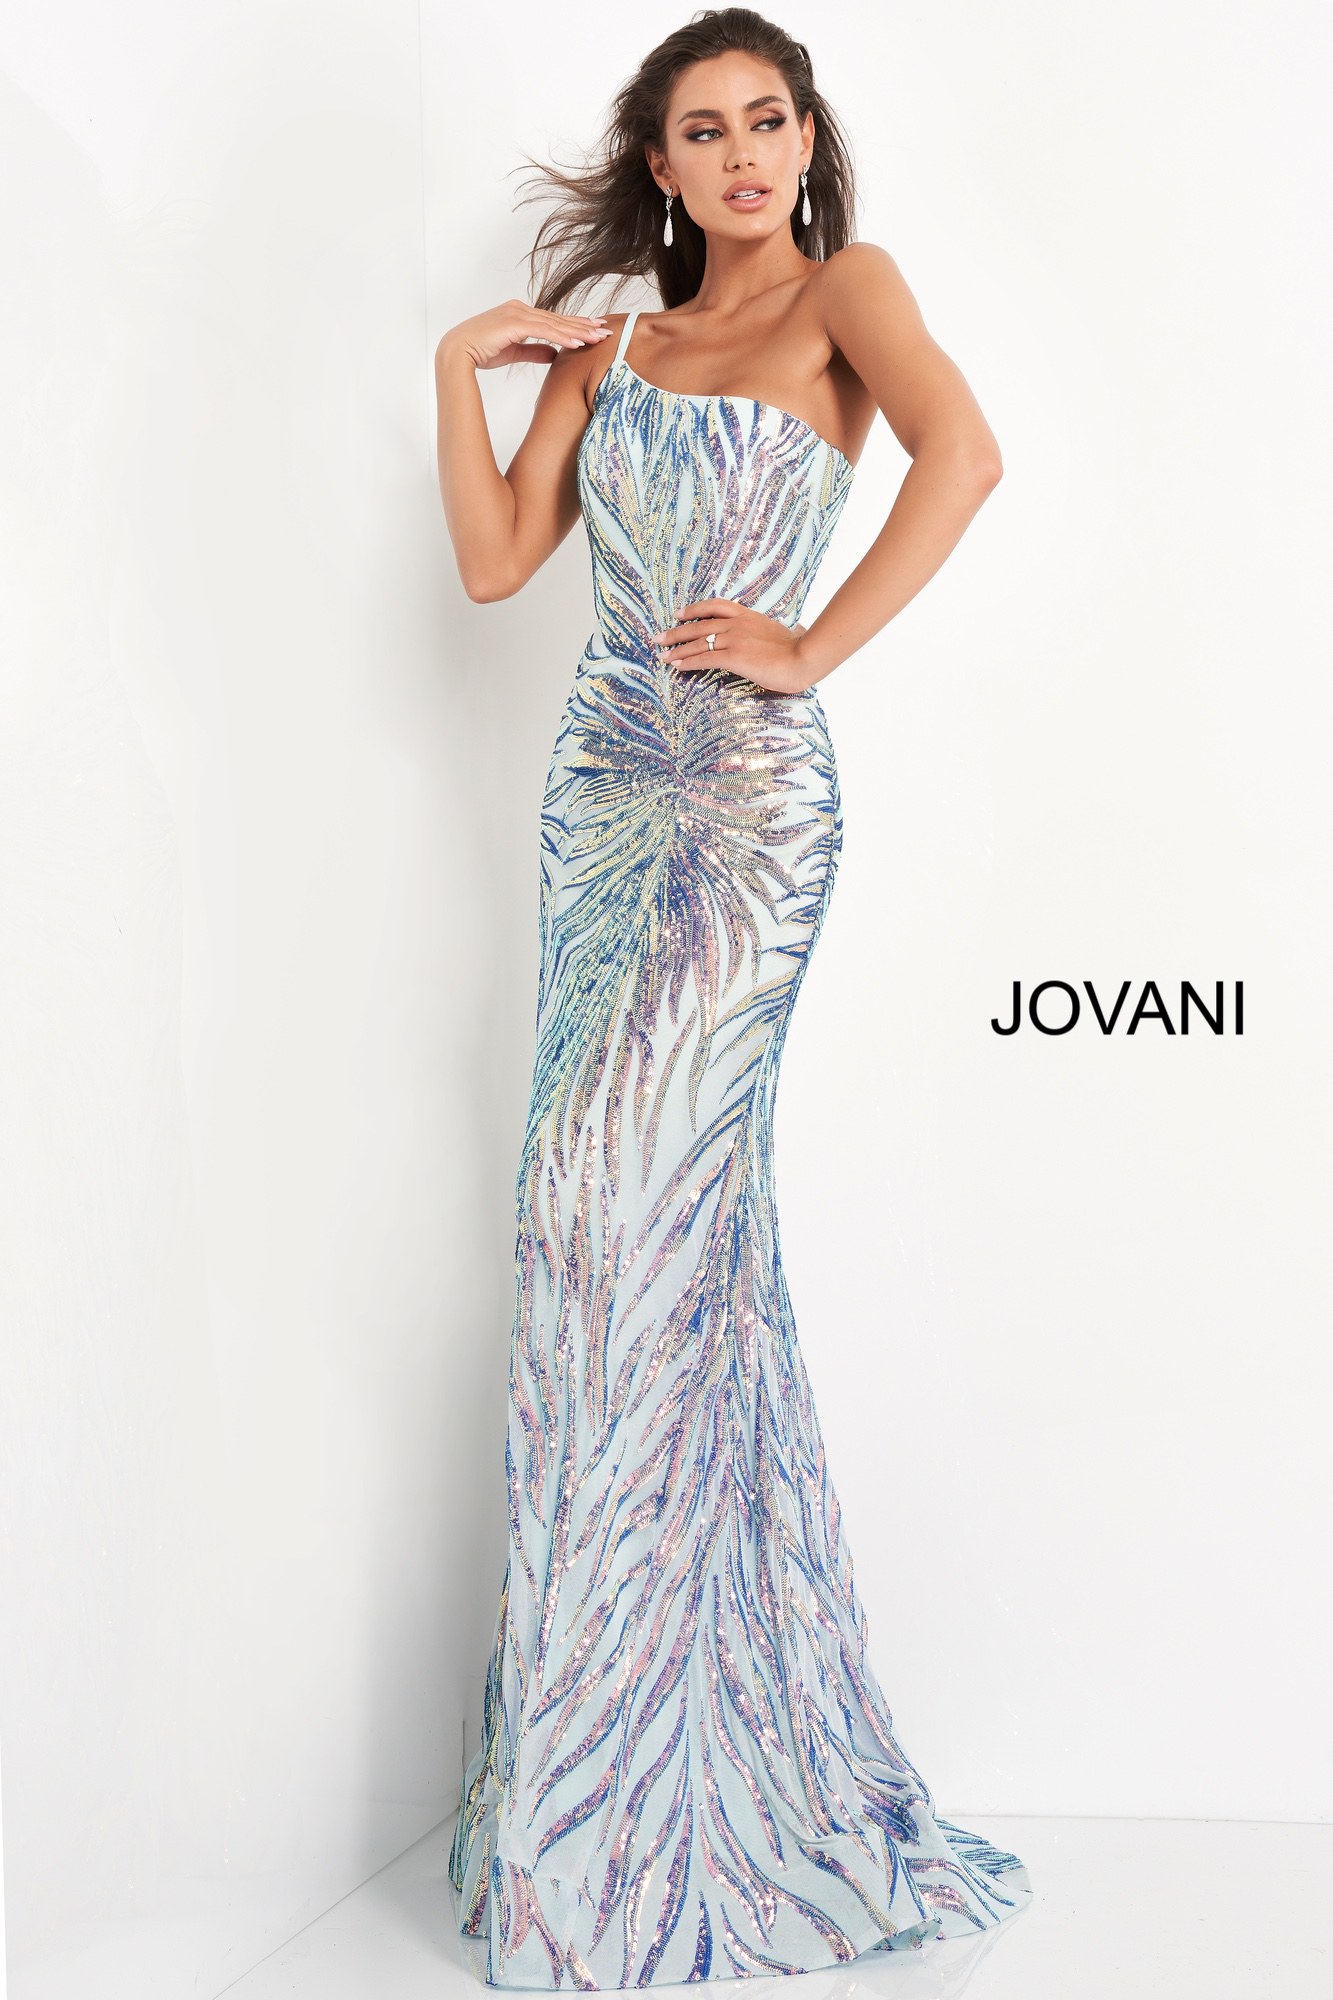 Jovani 05664 | Iridescent Sequin Form Fitting Prom Dress